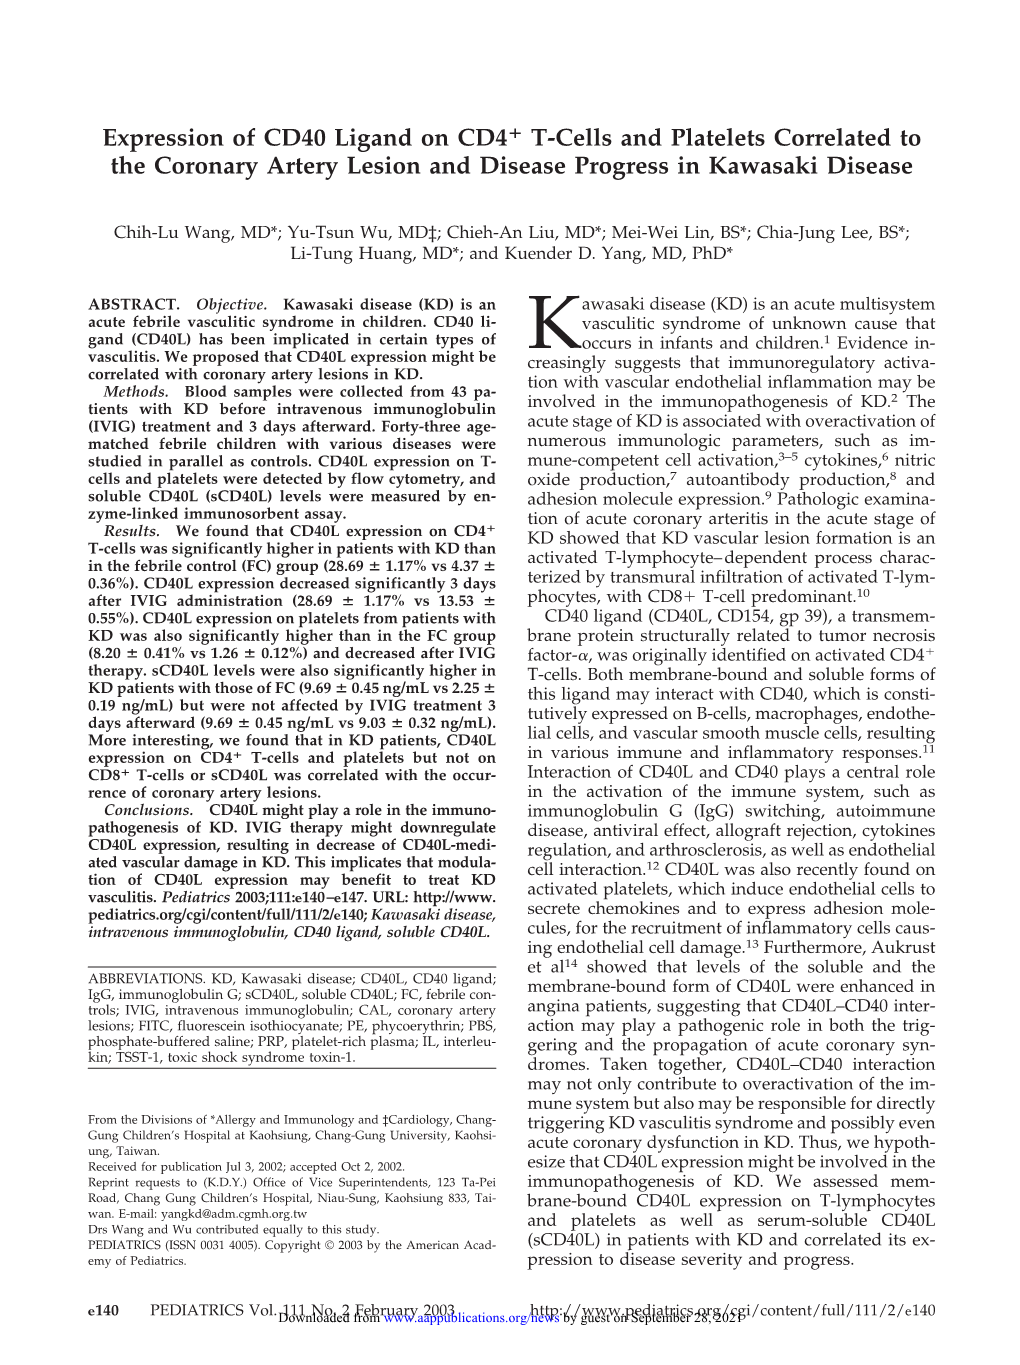 Kawasaki Disease (KD) Is an Acute Multisystem